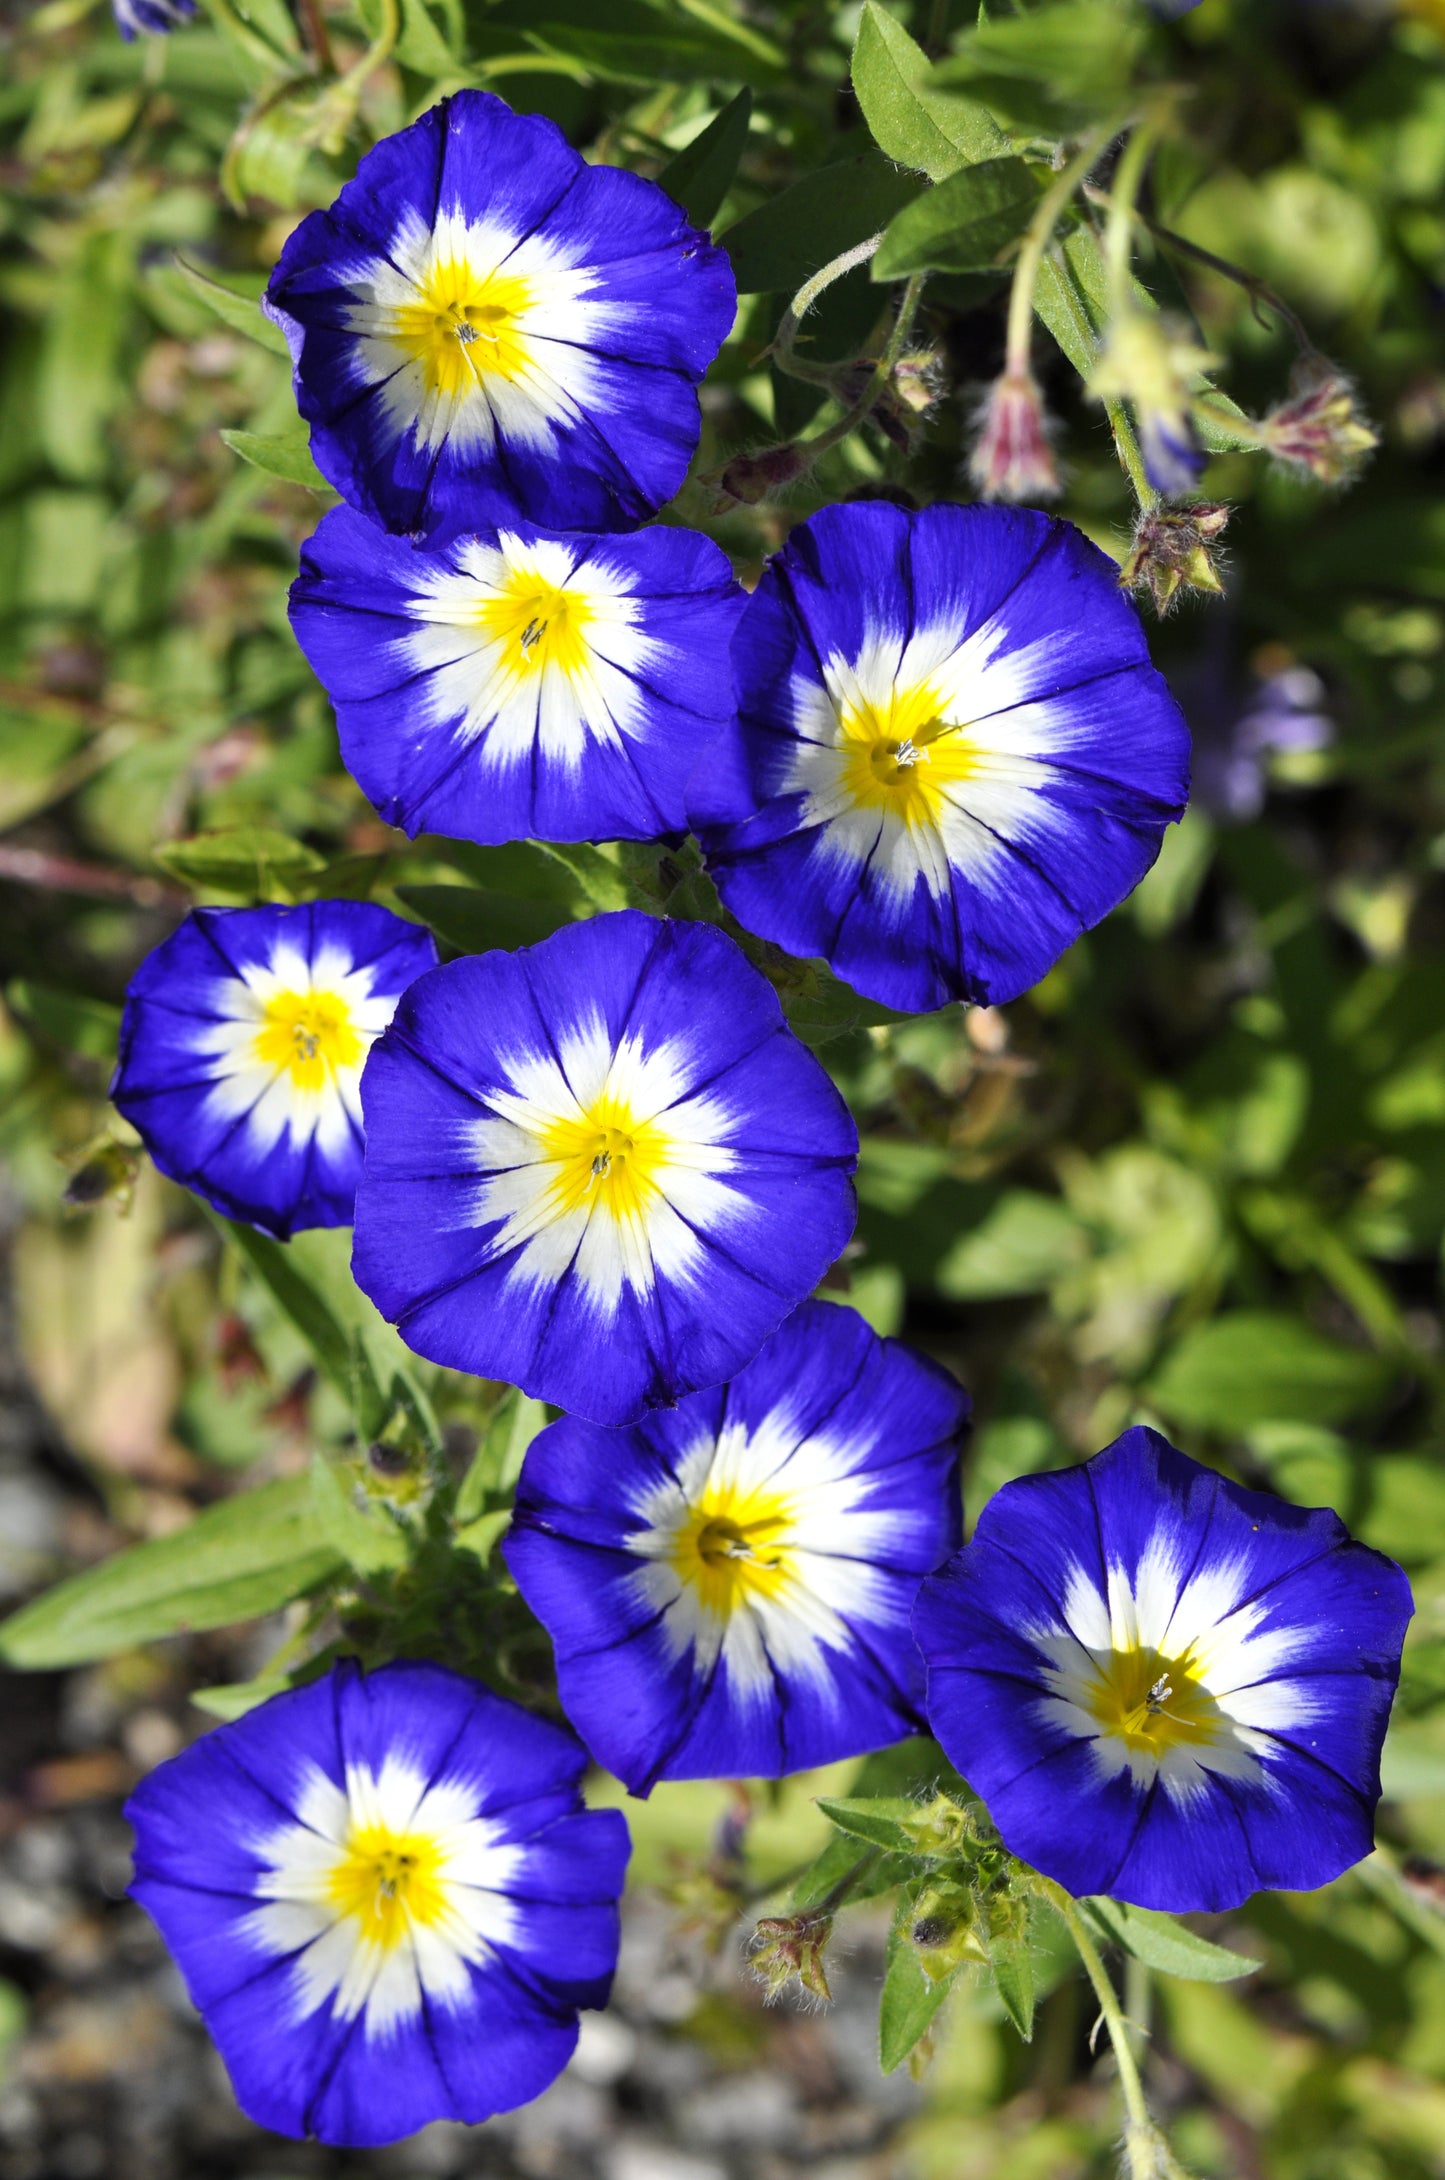 35 Blue Dwarf ROYAL ENSIGN MORNING GLORY Convolvulus Tricolor Royal Blue White & Yellow Flower Vine Seeds